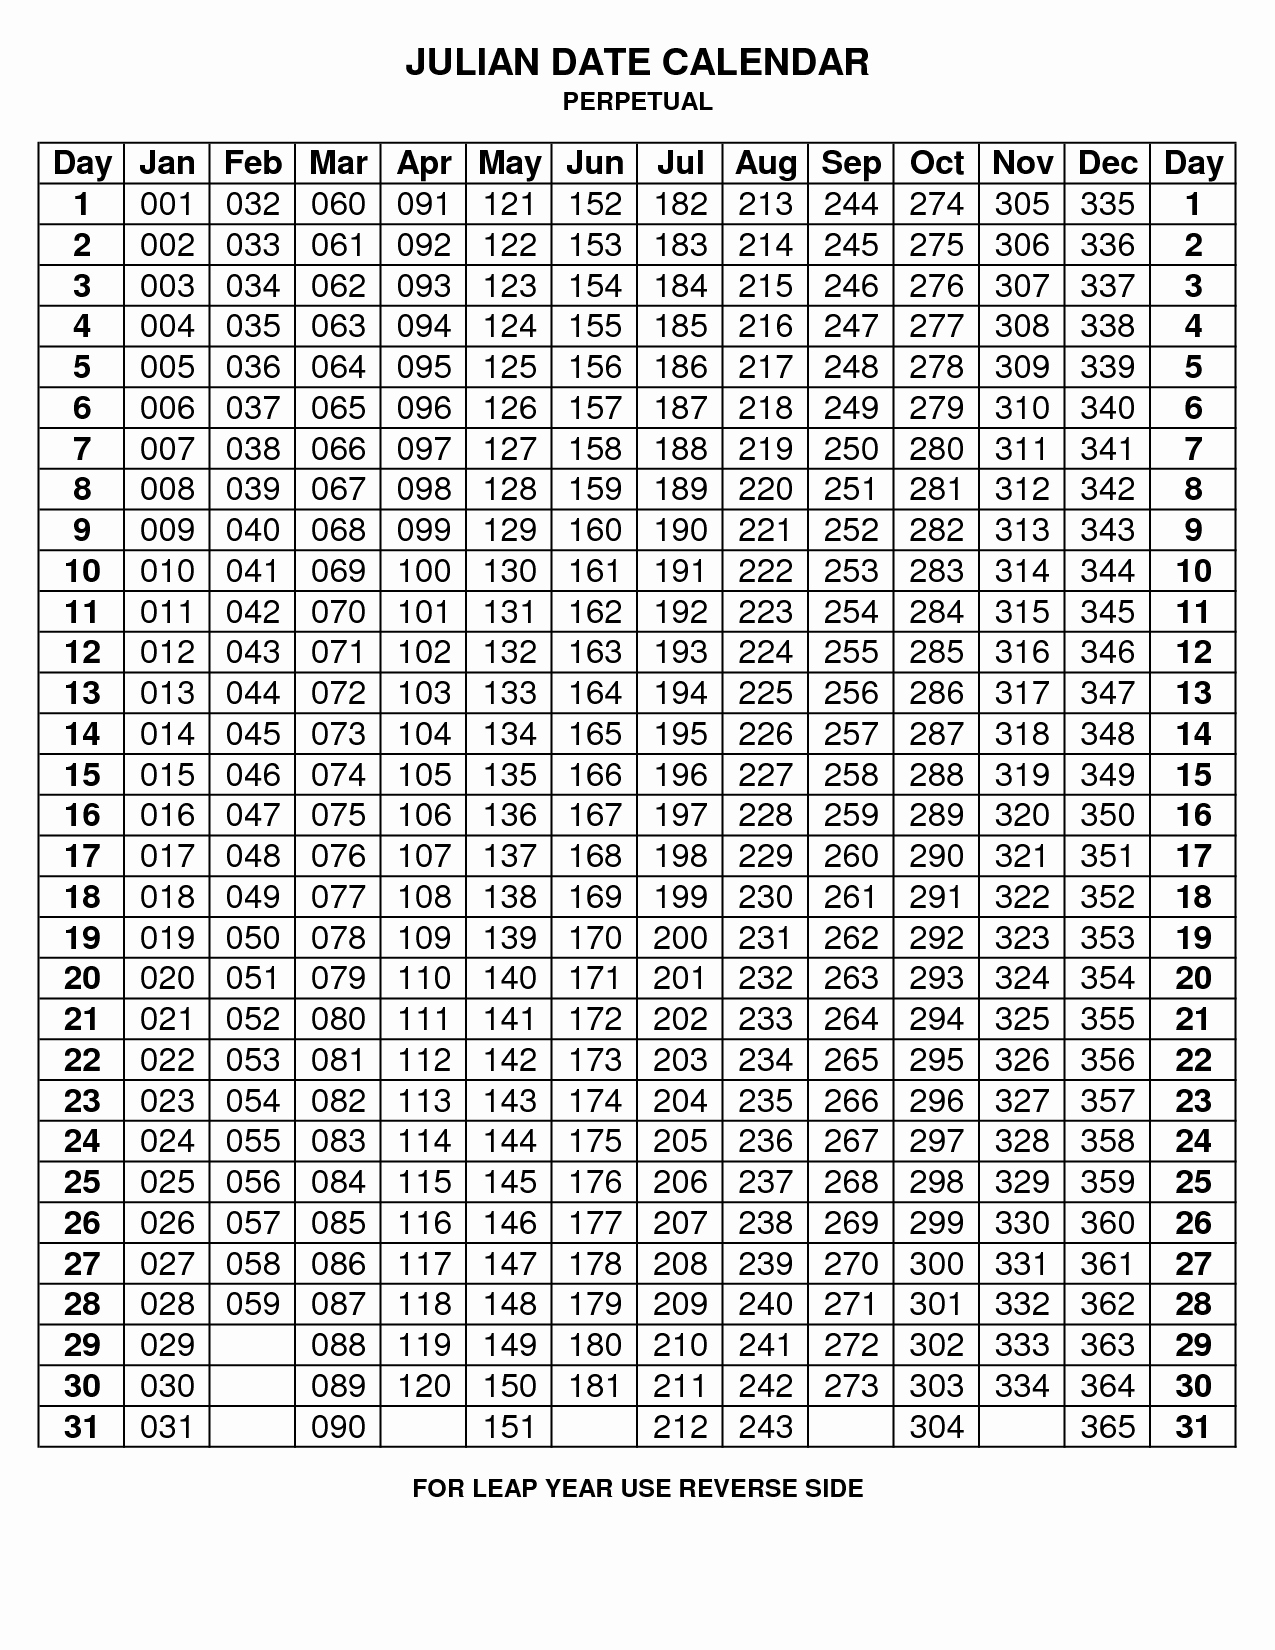 Depo Provera Perpetual Calendar To Print - Calendar Depo Dosing Calendar 2021